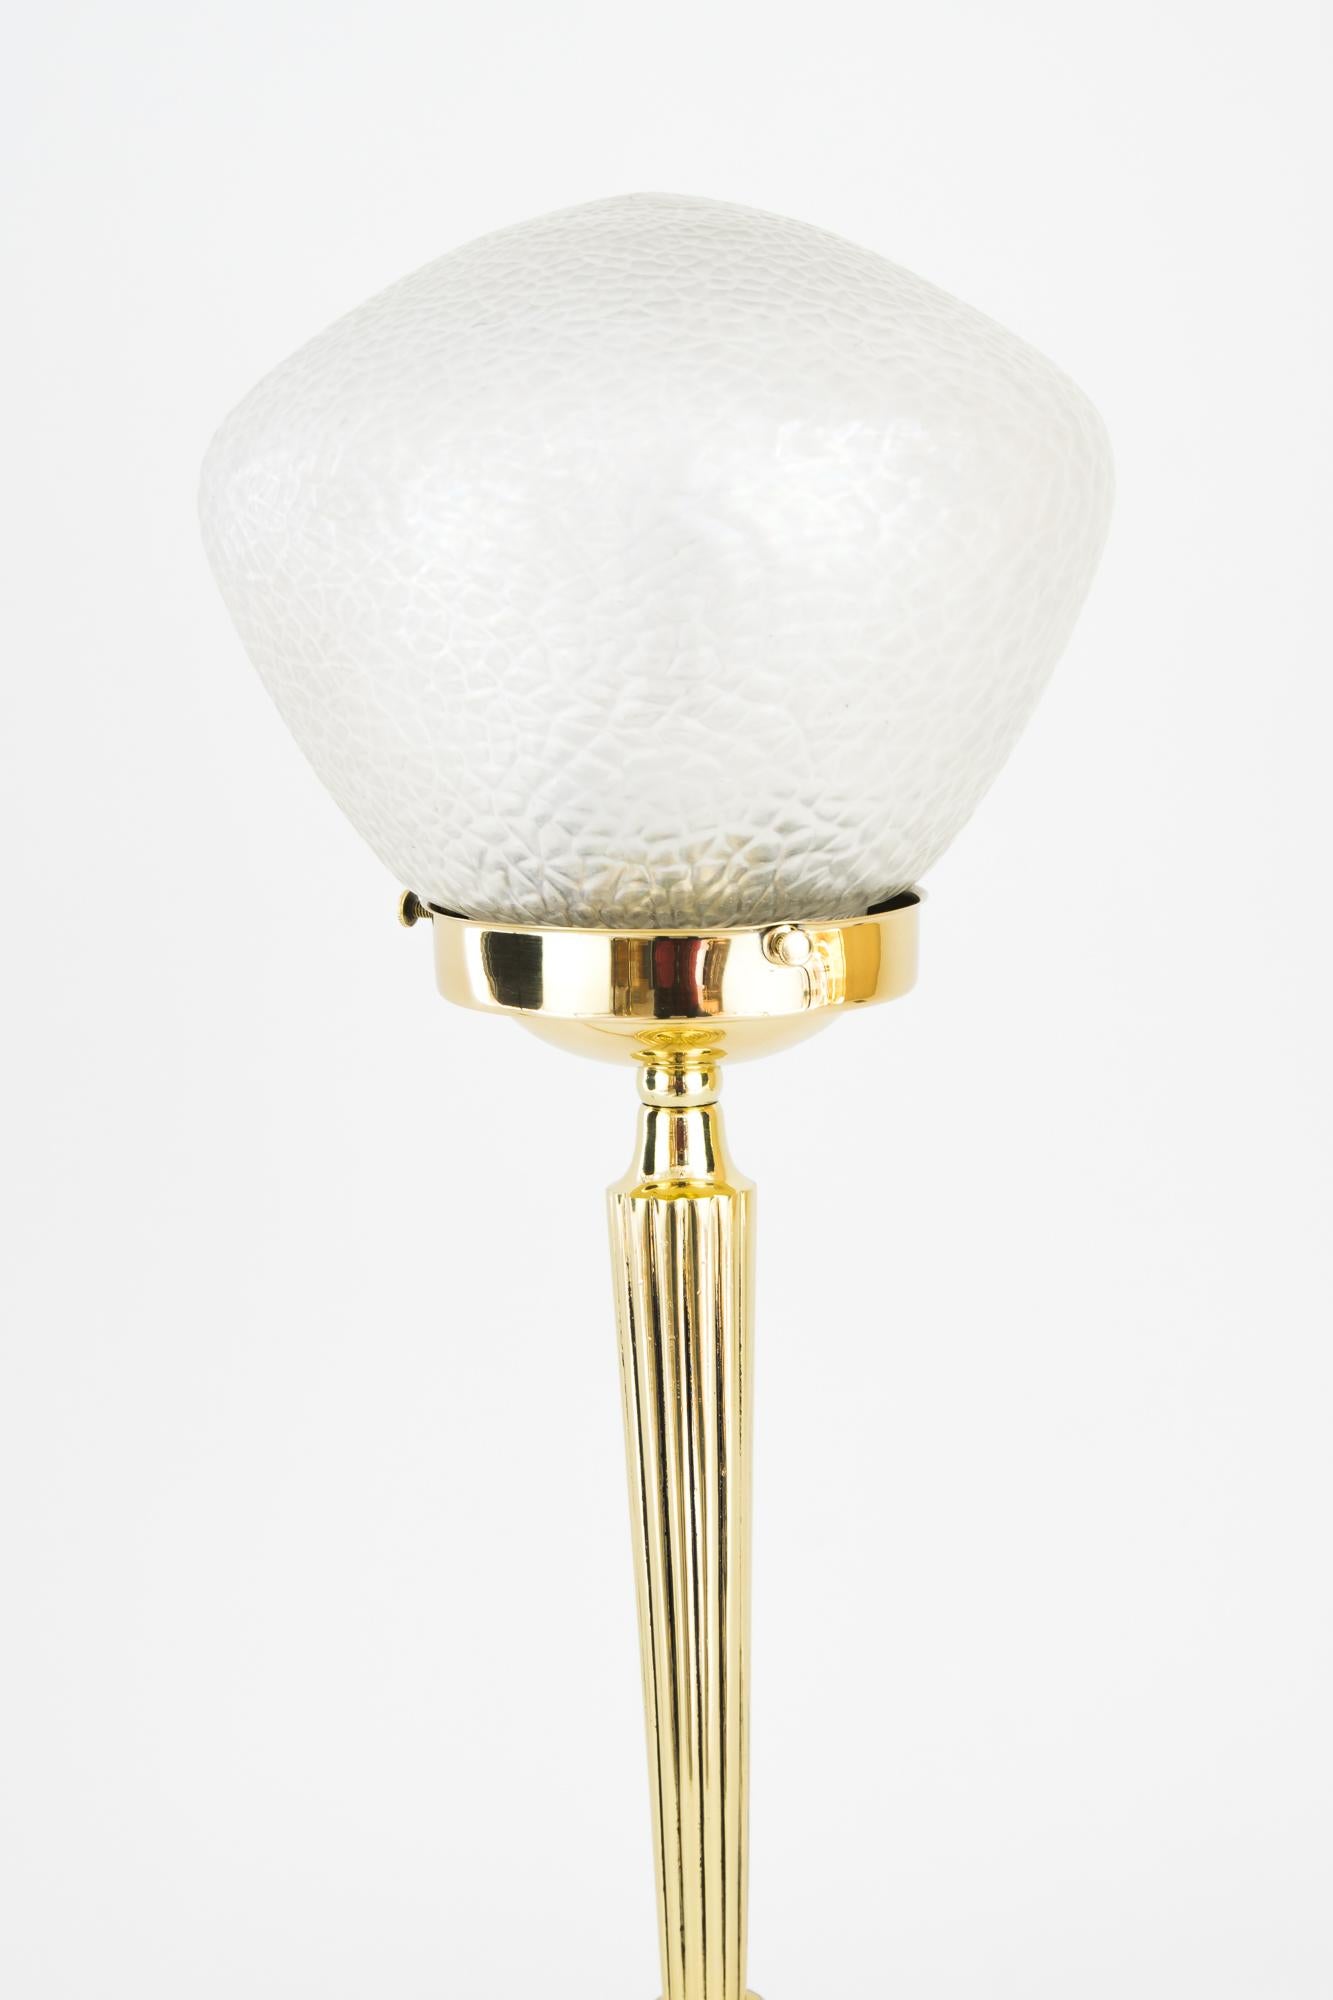 Austrian Art Deco Table Lamp with Original Glass Shade, Vienna, circa 1920s